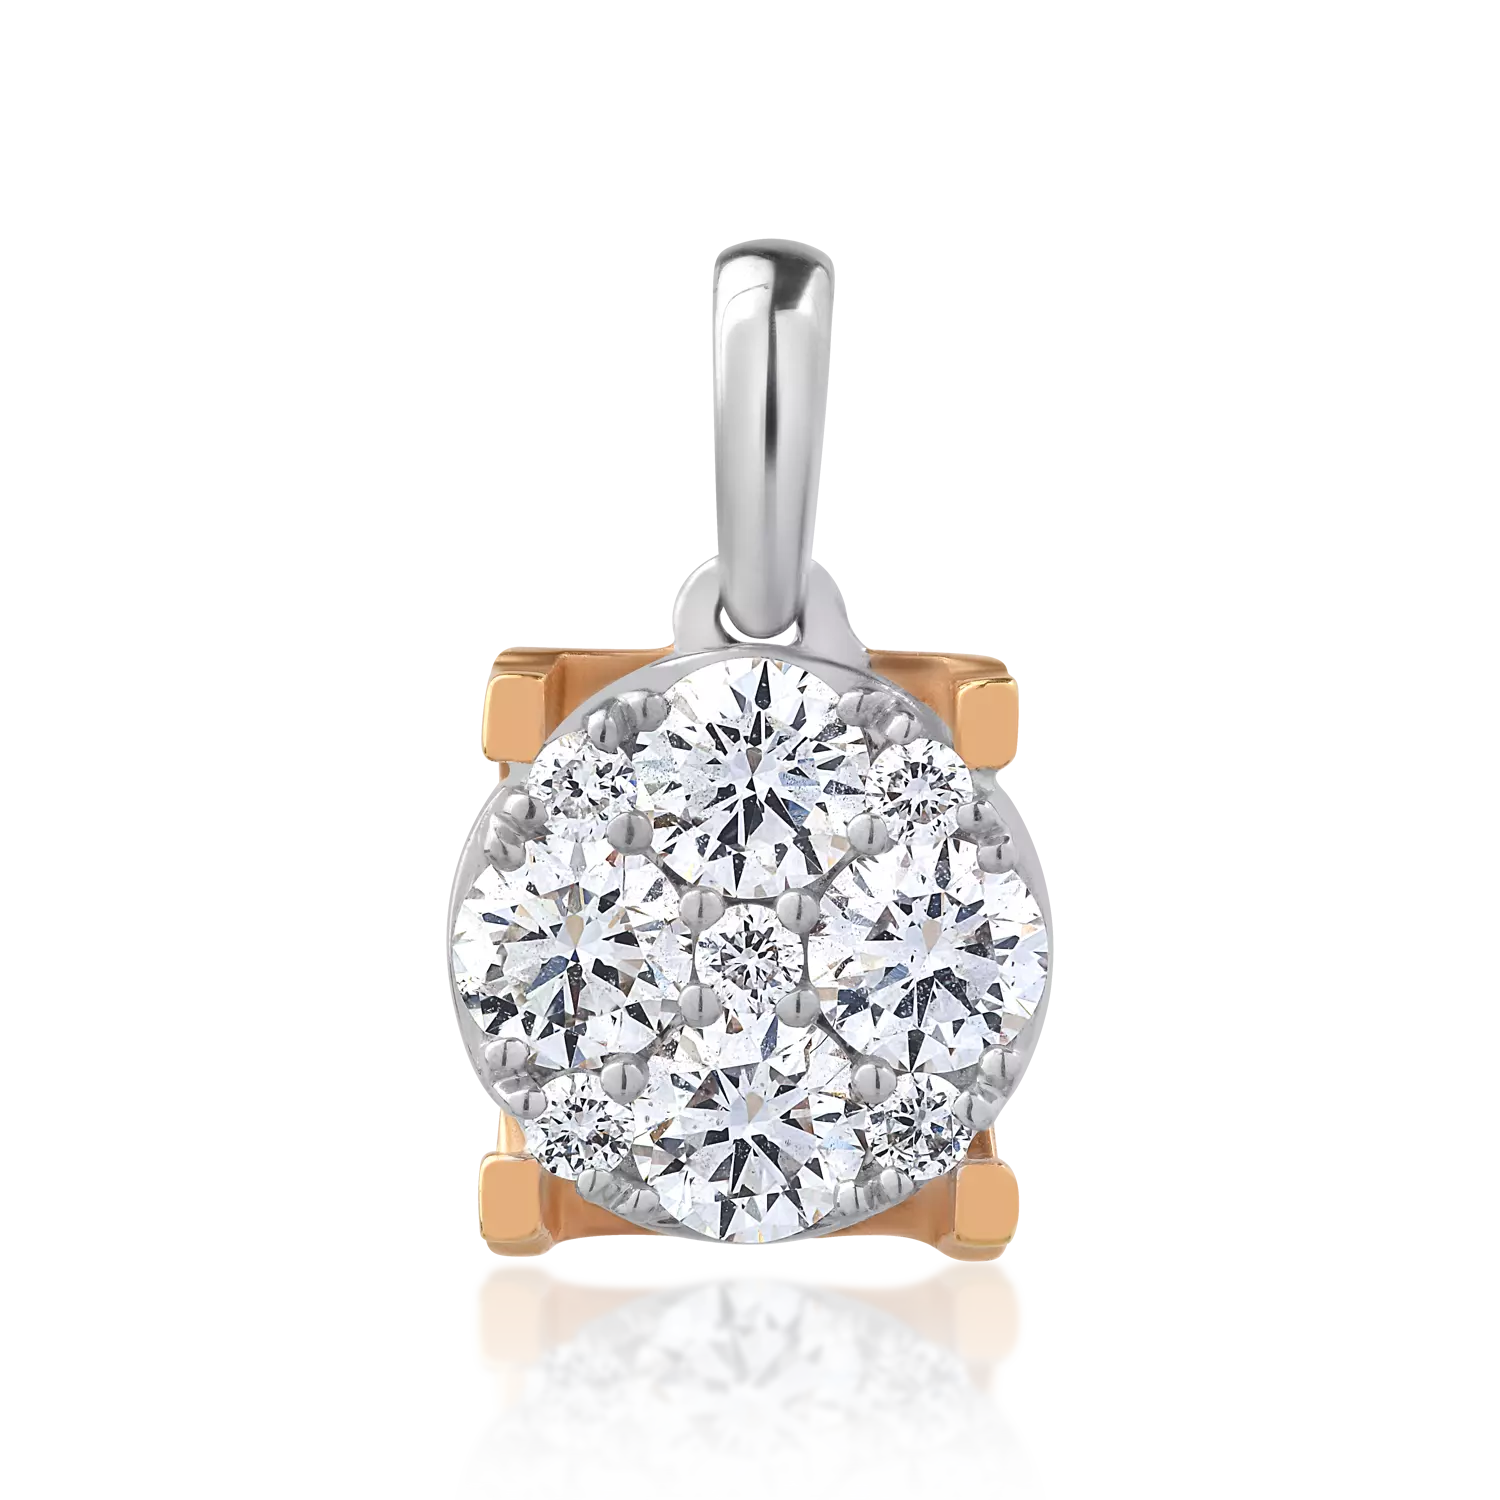 18K white gold pendant with 0.07ct diamonds